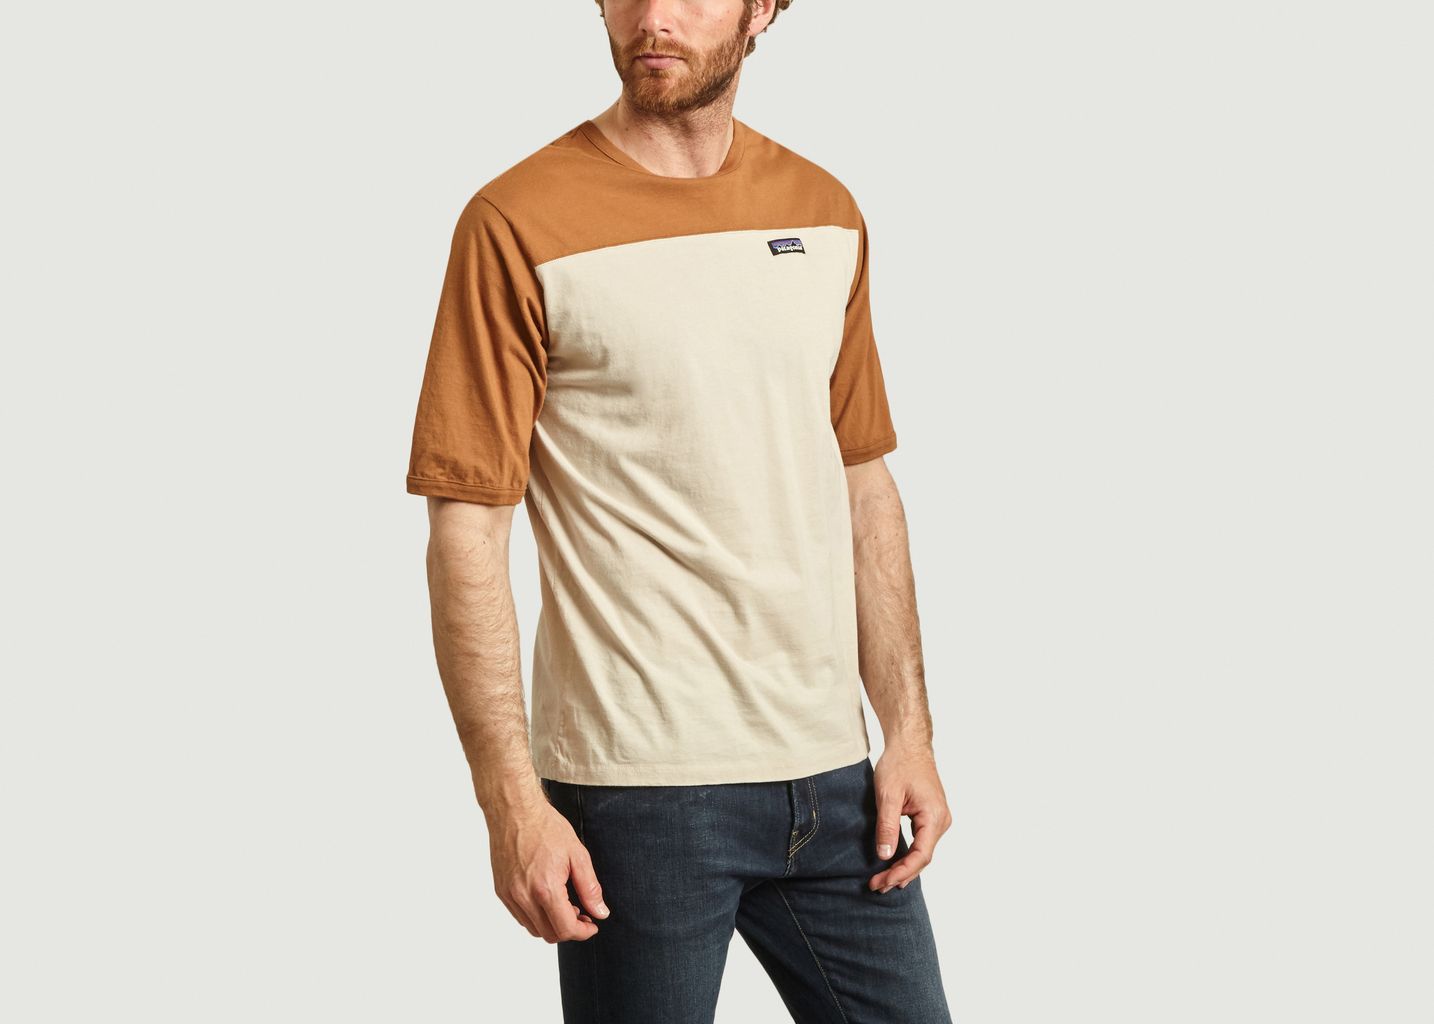 T-shirt bicolore en coton de conversion - Patagonia